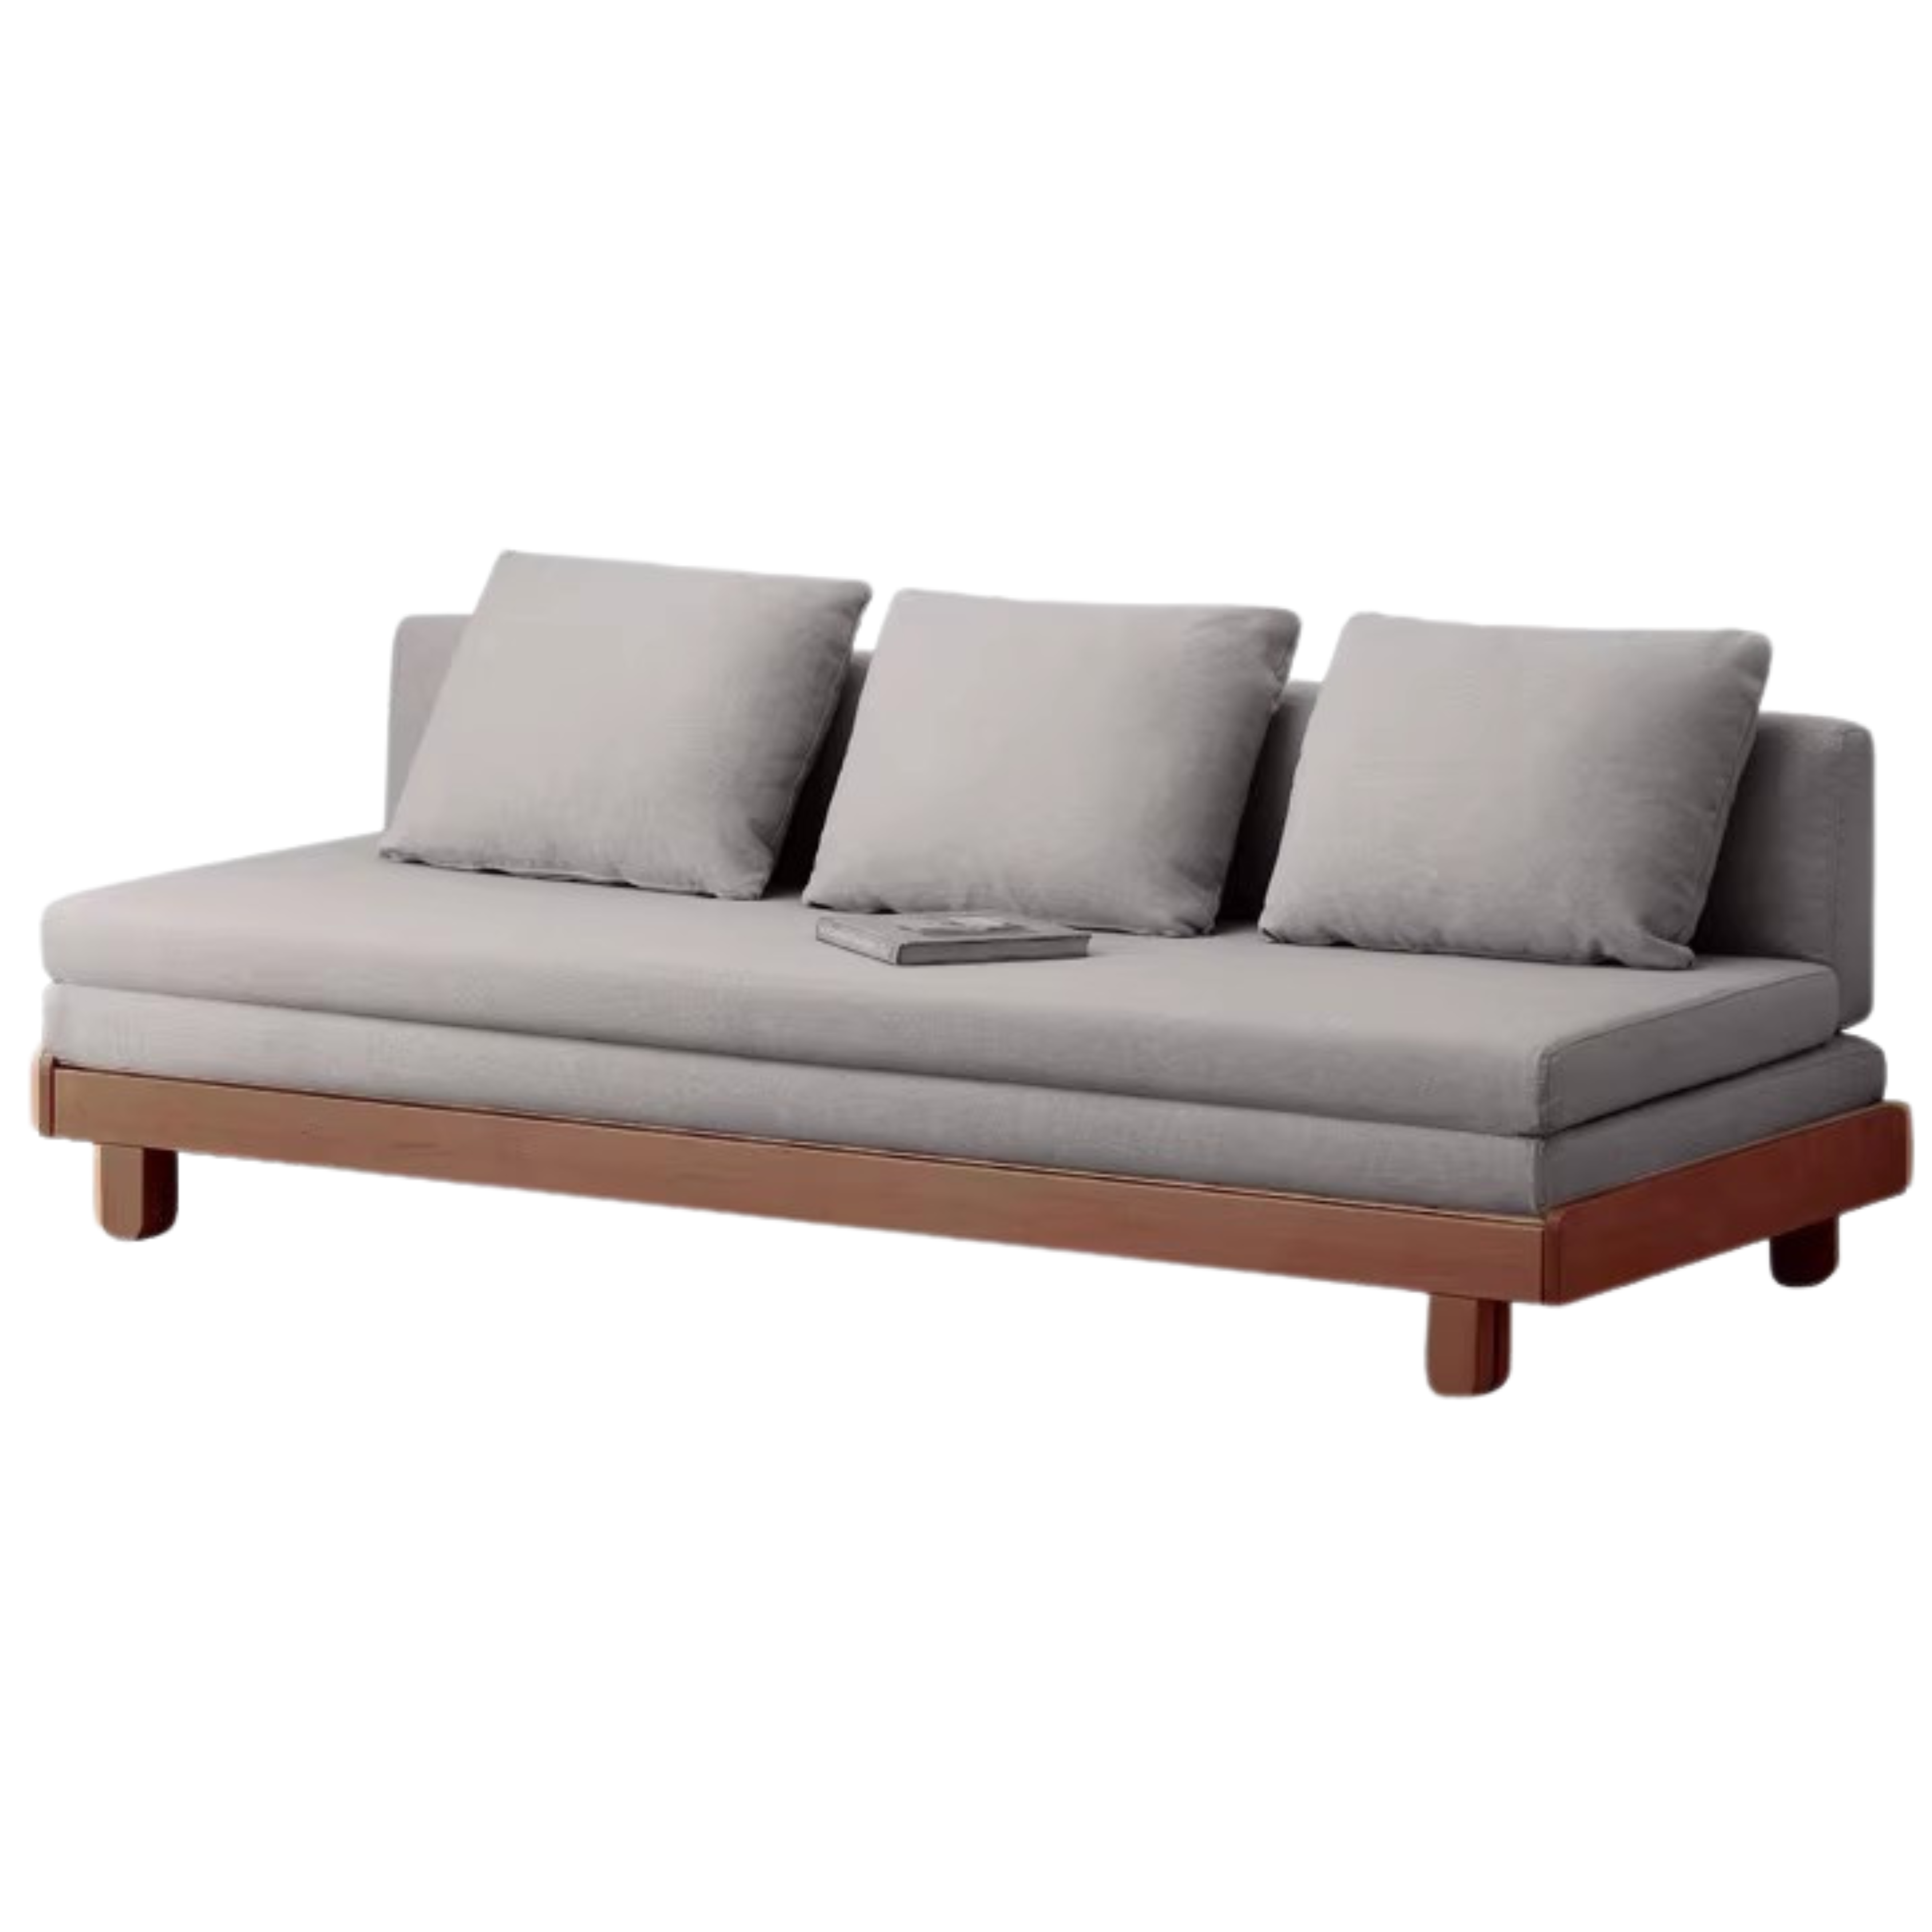 Oak, Beech solid wood sofa bed